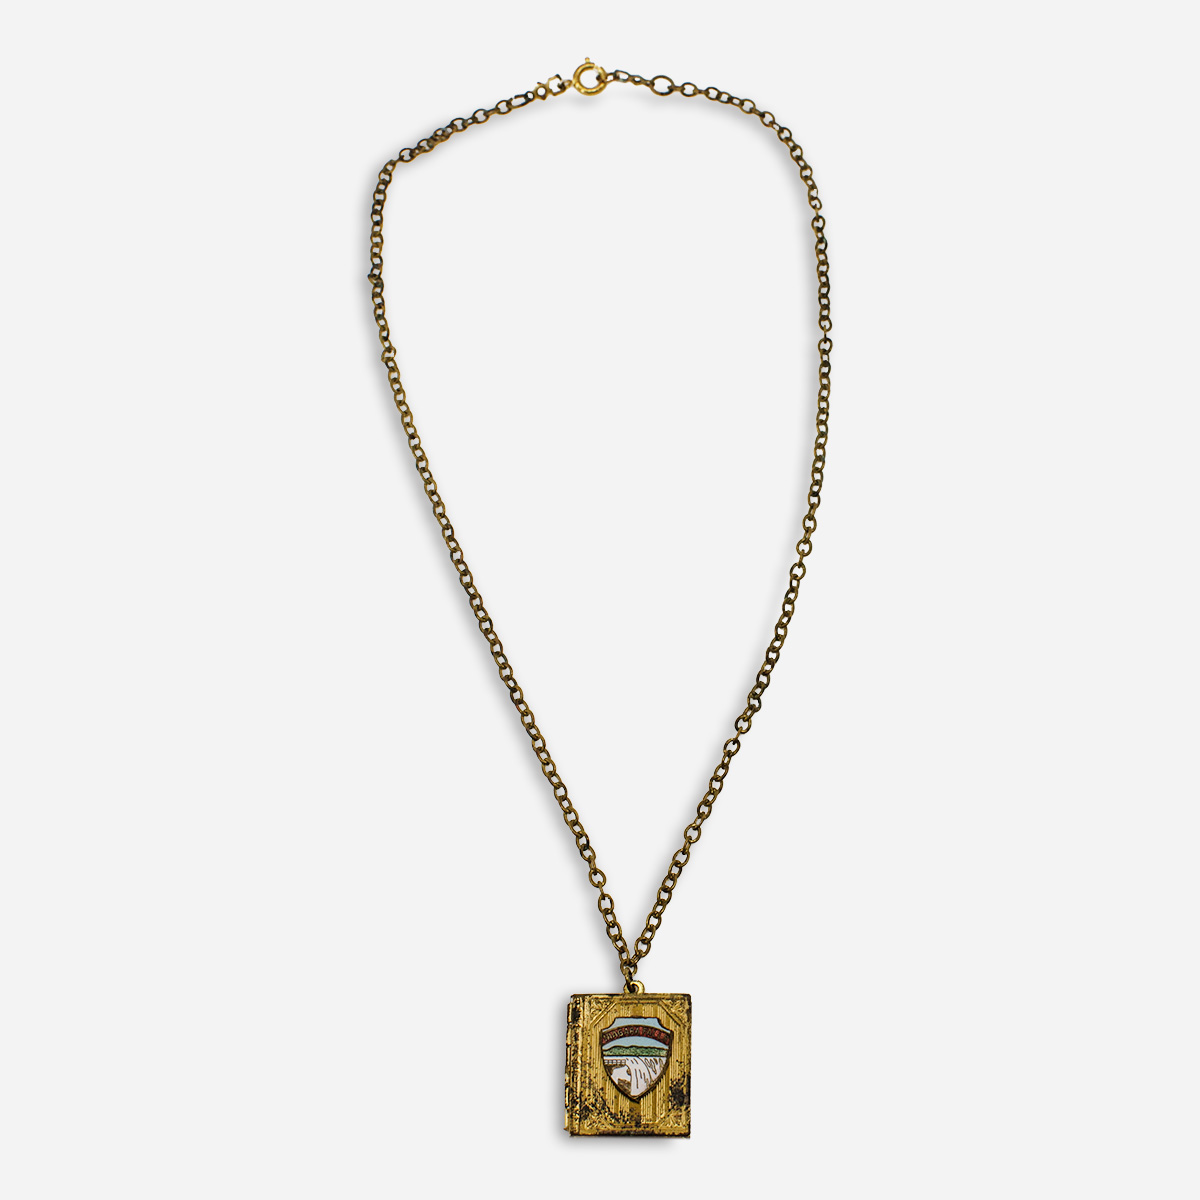 niagara falls locket necklace